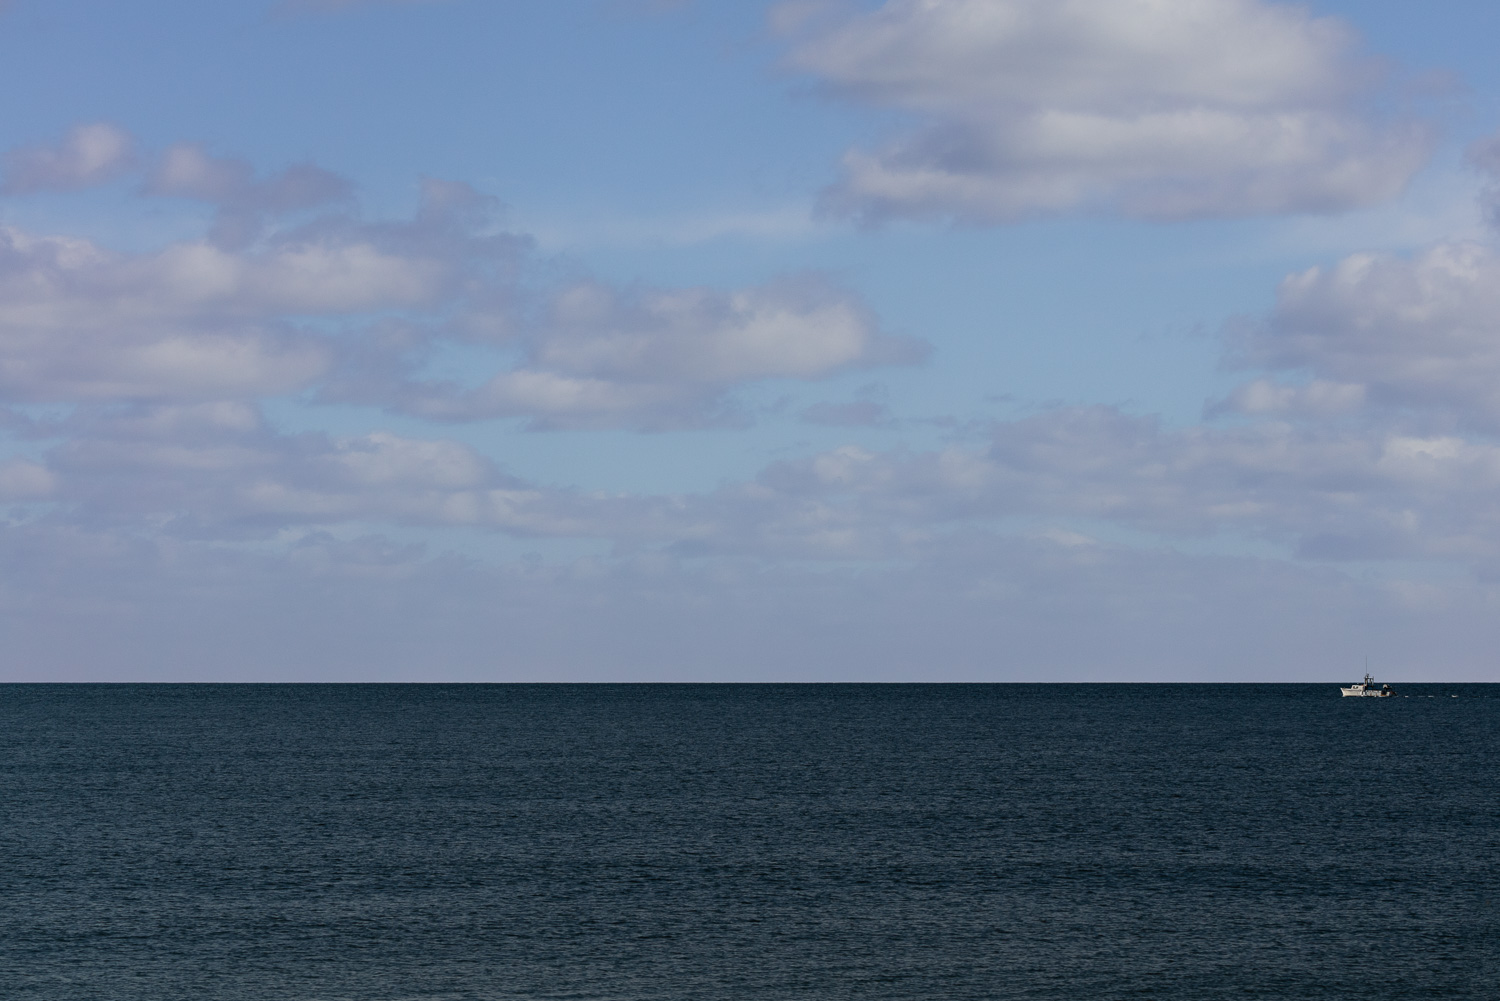  solitary boat on horizon 